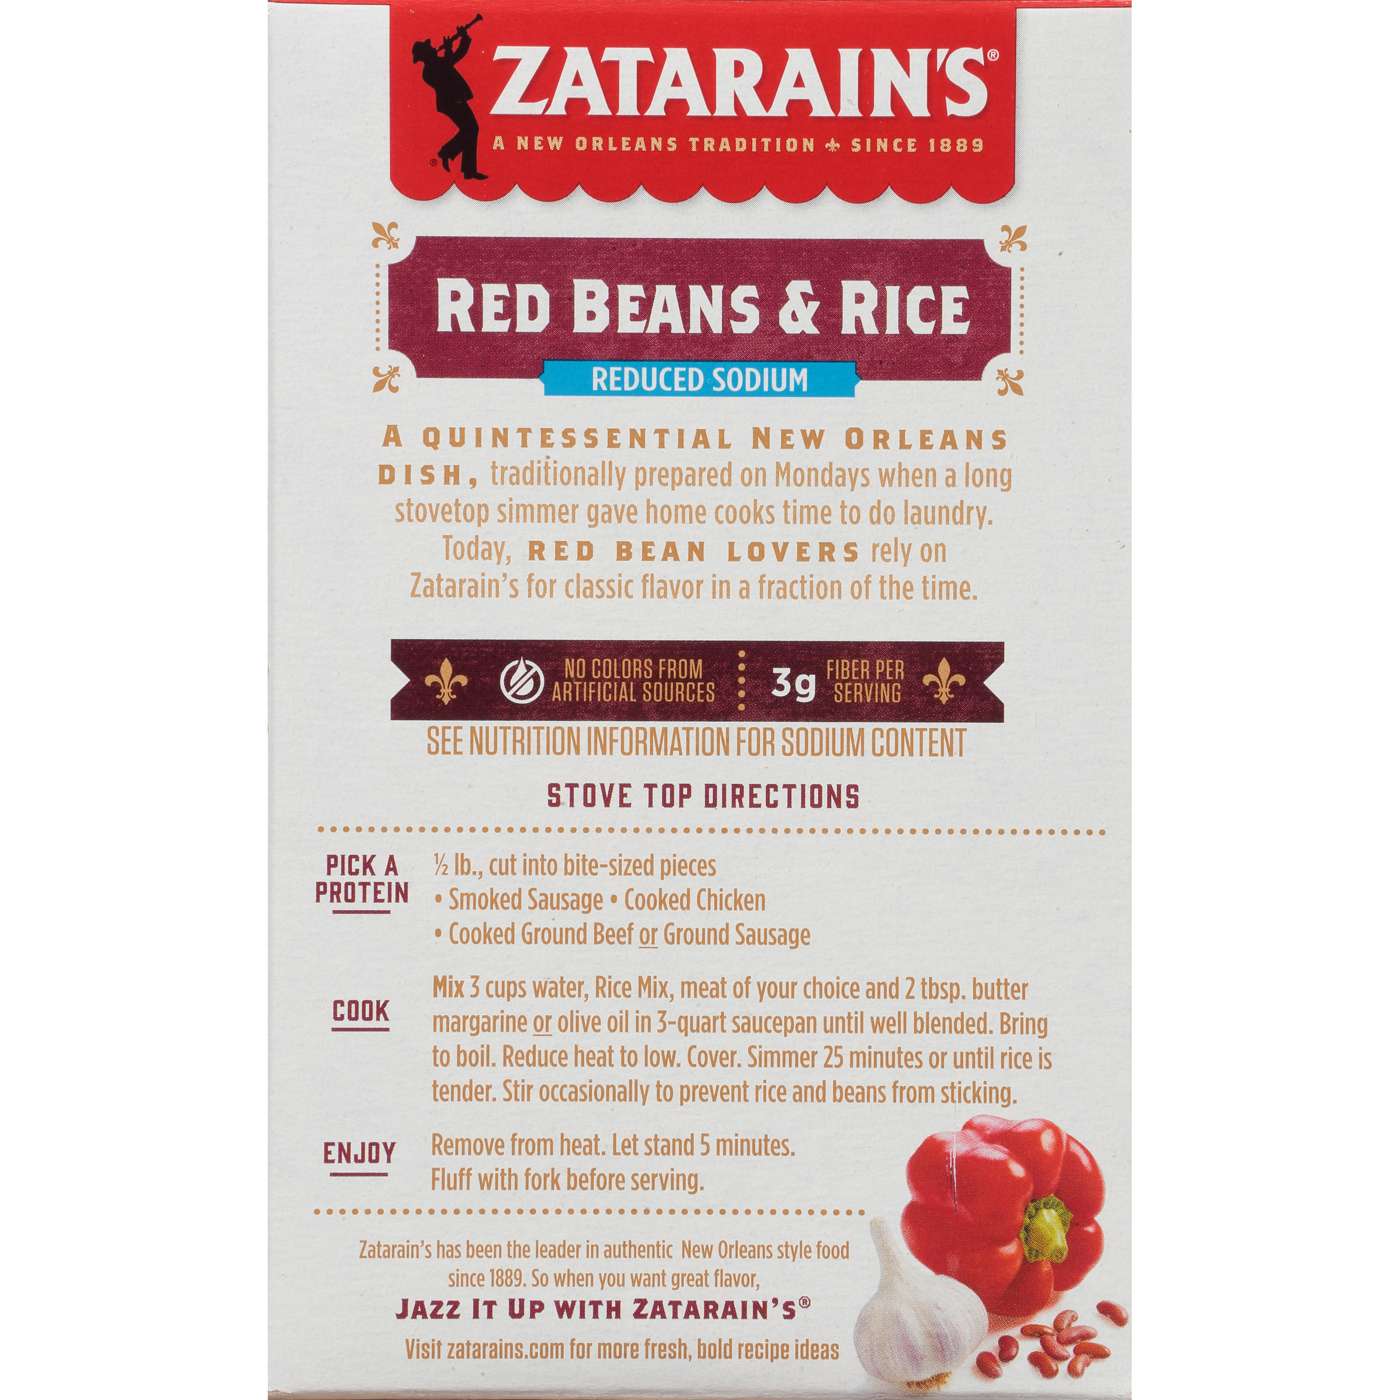 Zatarain's Reduced Sodium Red Beans & Rice; image 3 of 4